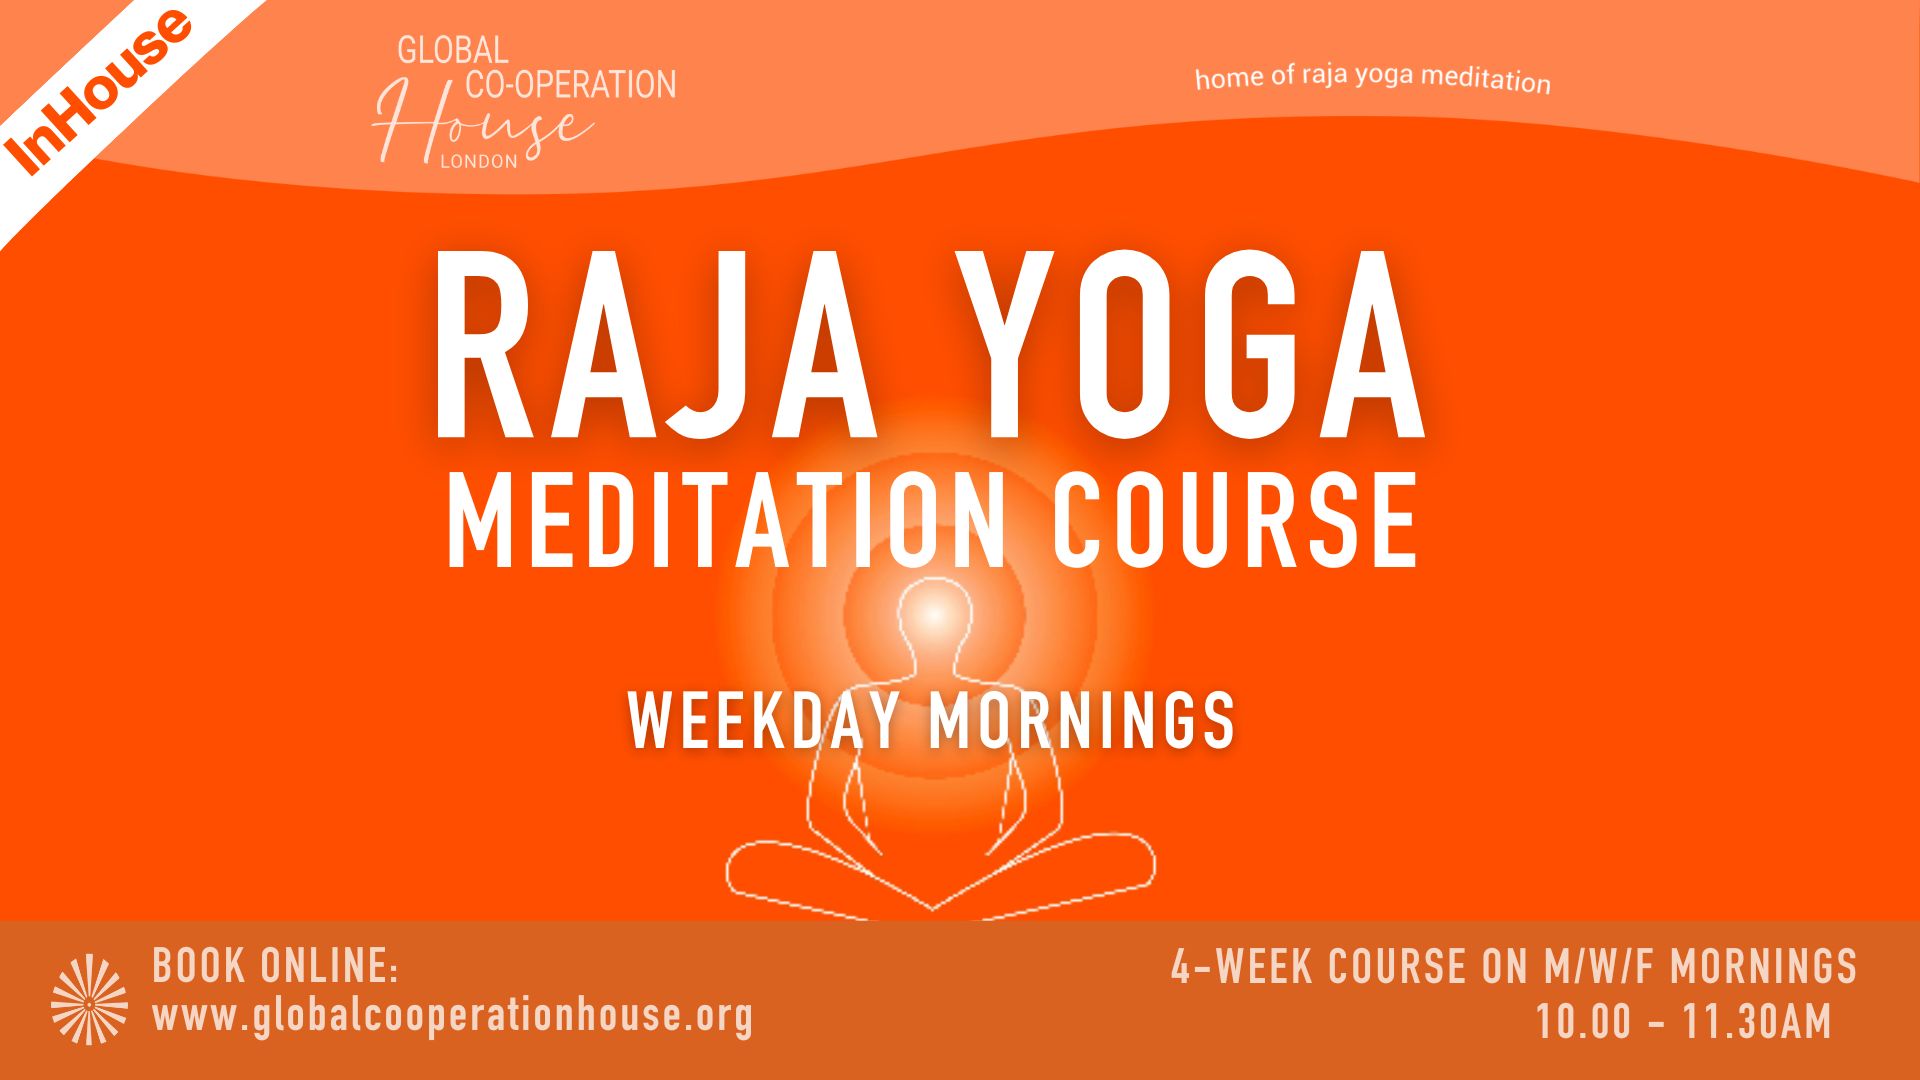 In House - Raja Yoga Meditation Course - Weekday Mornings